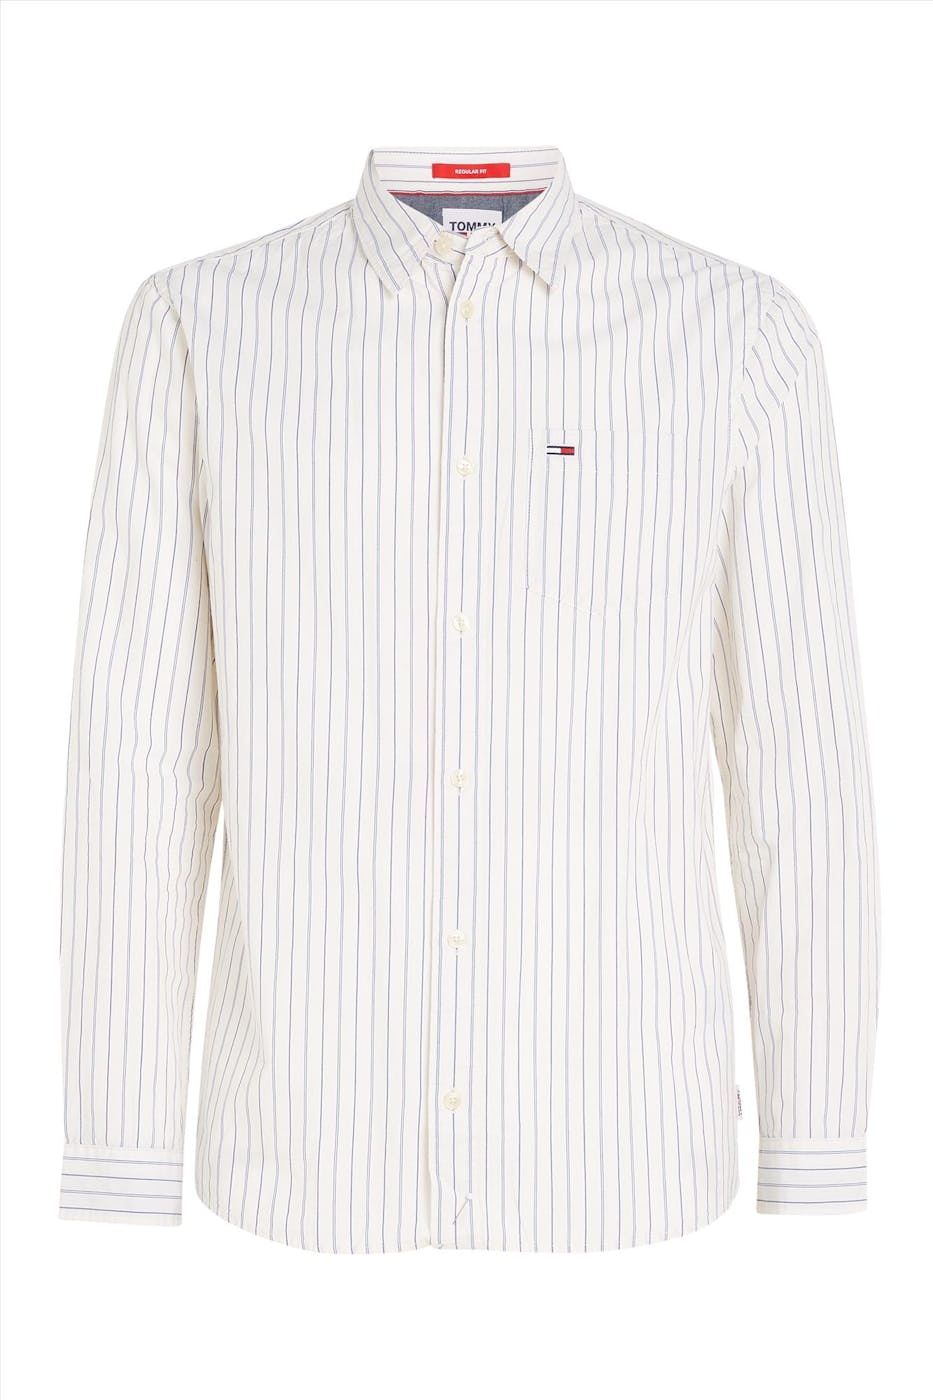 Tommy Jeans - Wit Essential Stripe hemd